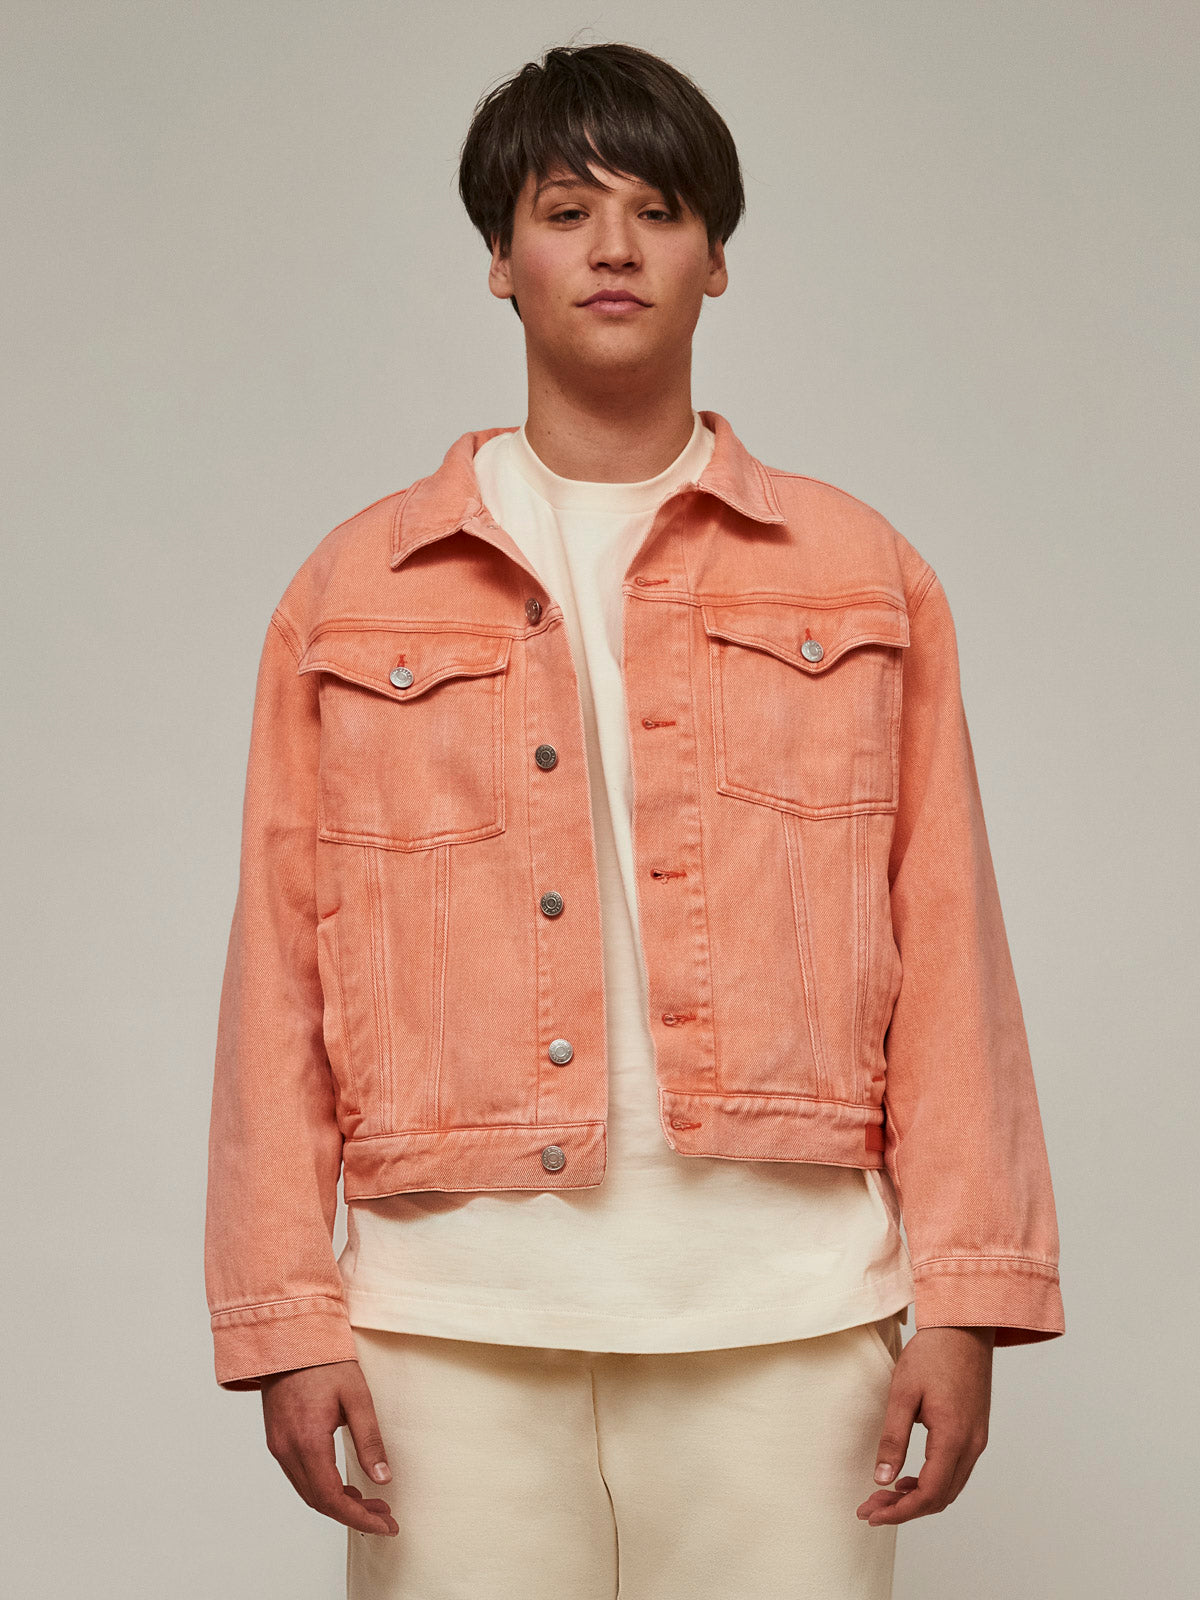 Odd Orange Jeans jacket/ LMTD edition